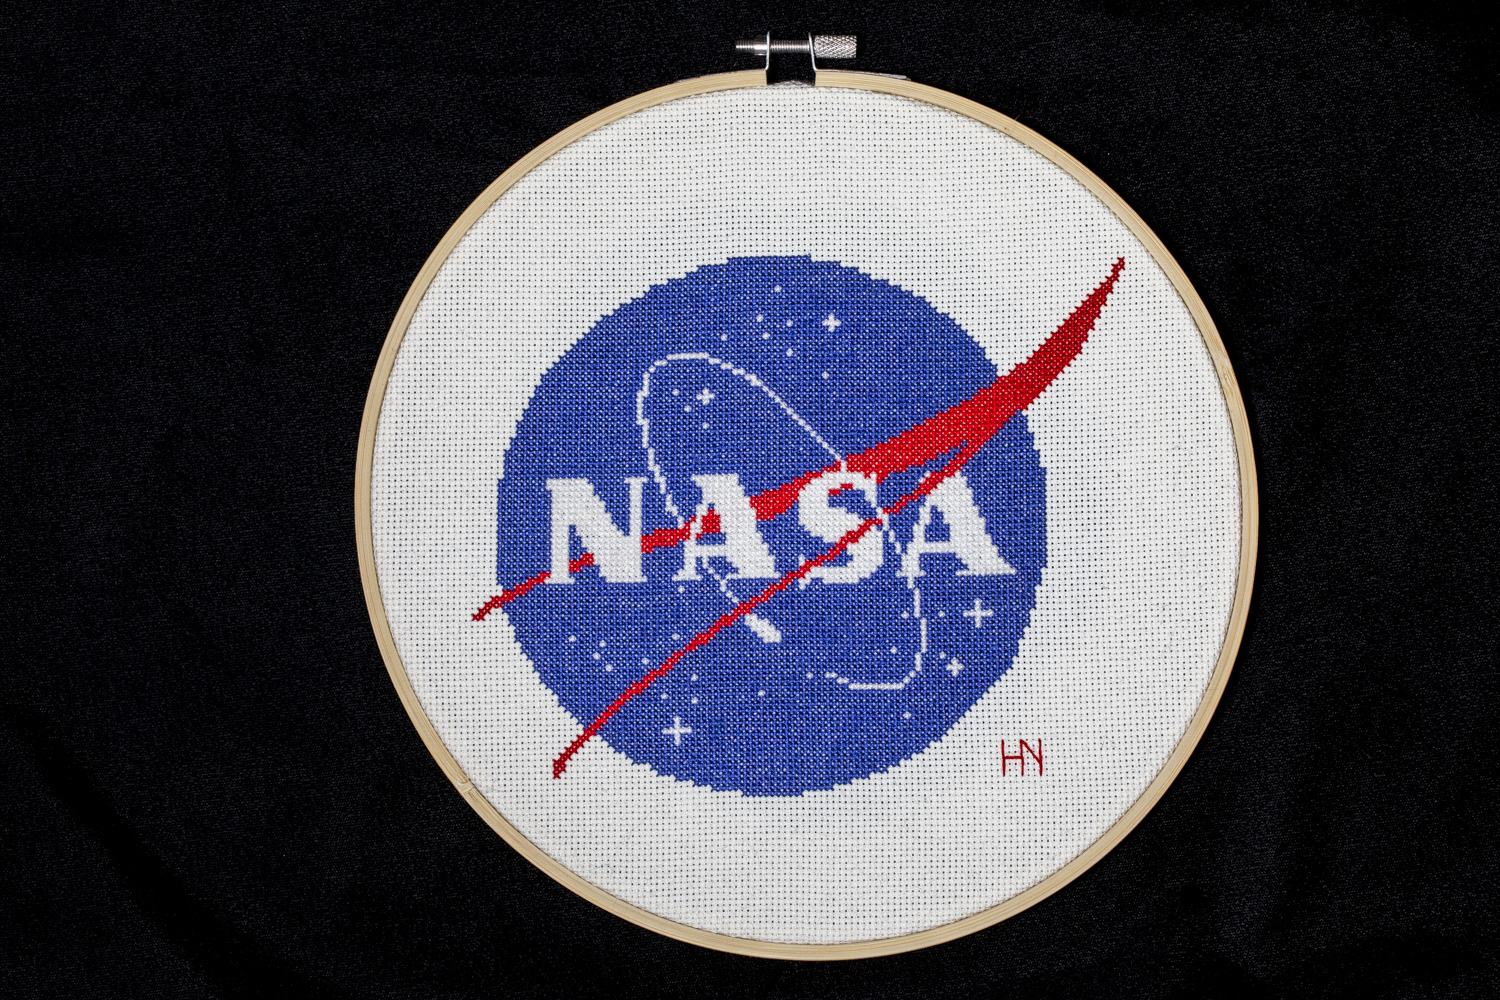 needlepoint of NASA logo, photo by Steve Boyle